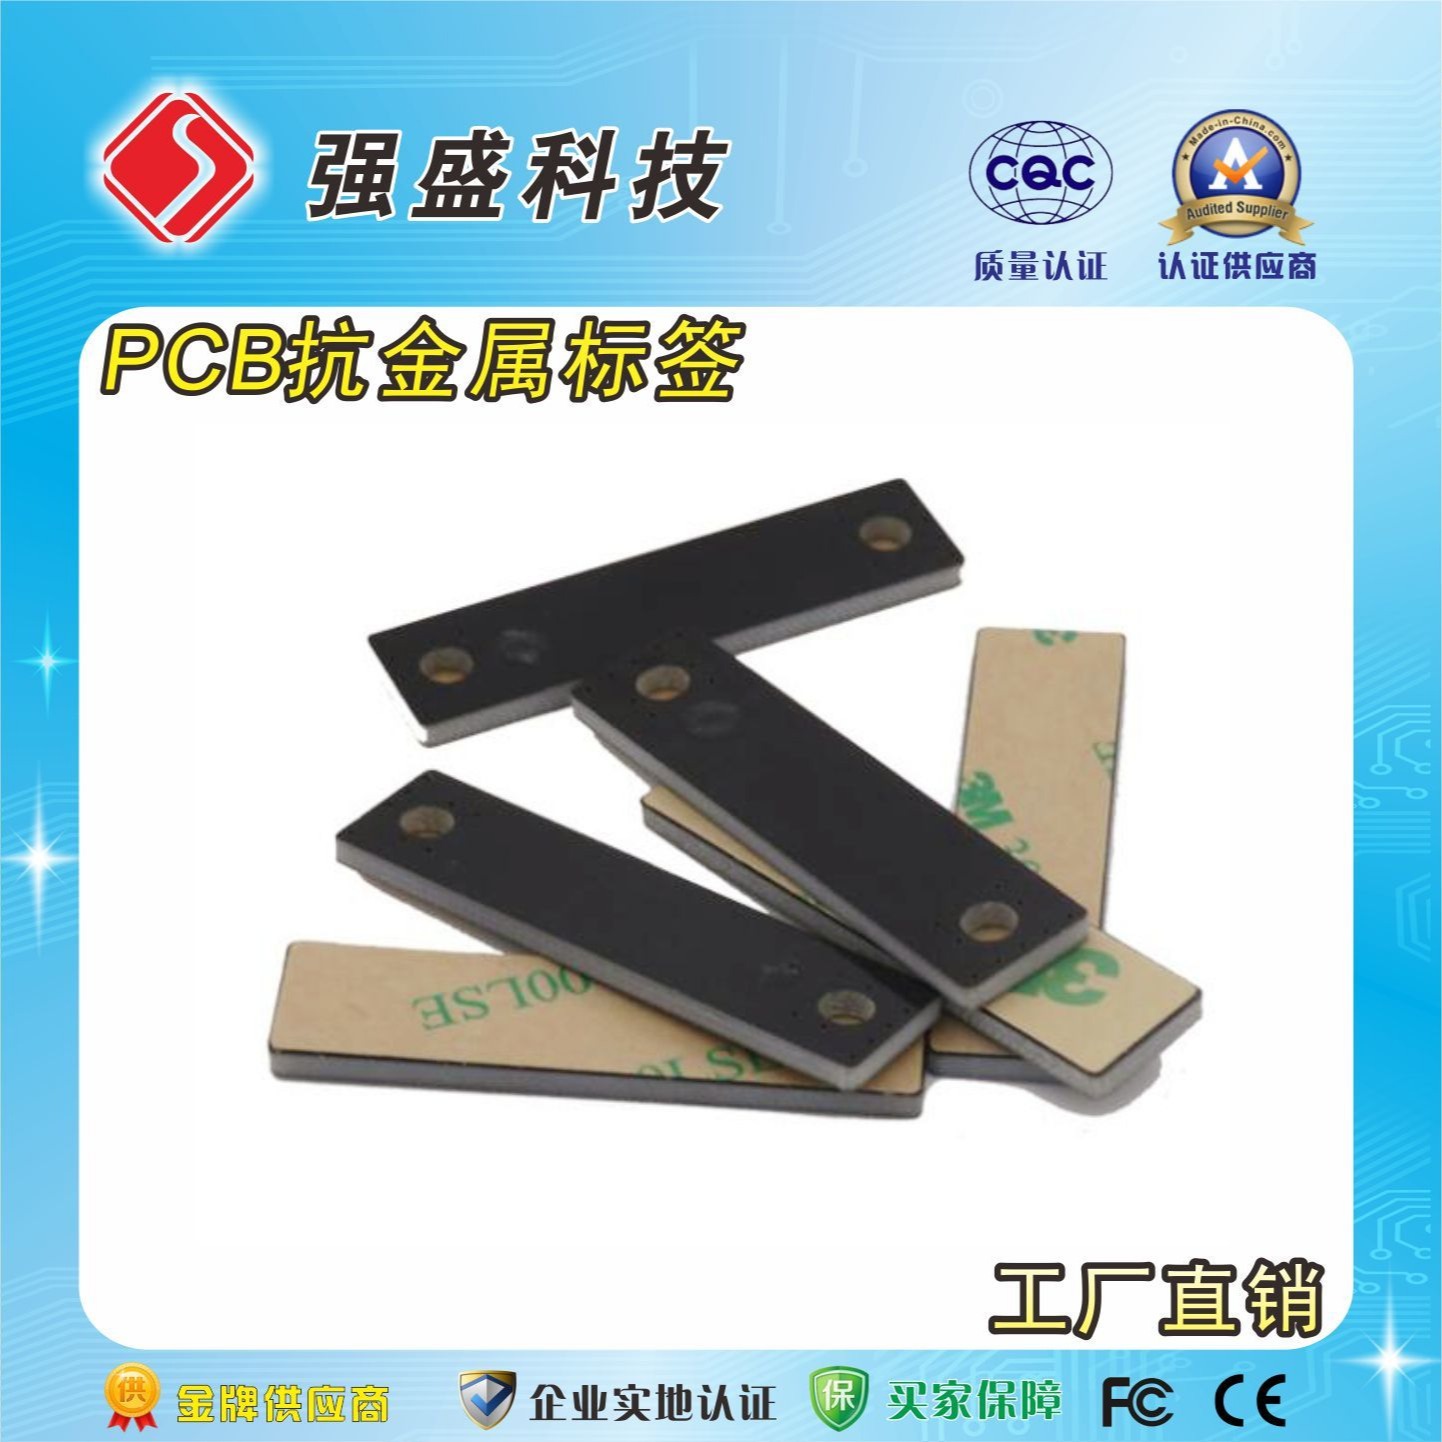 PCB超高频抗金属标签 RFID电子标签厂家 汽车部件PCB电子标签